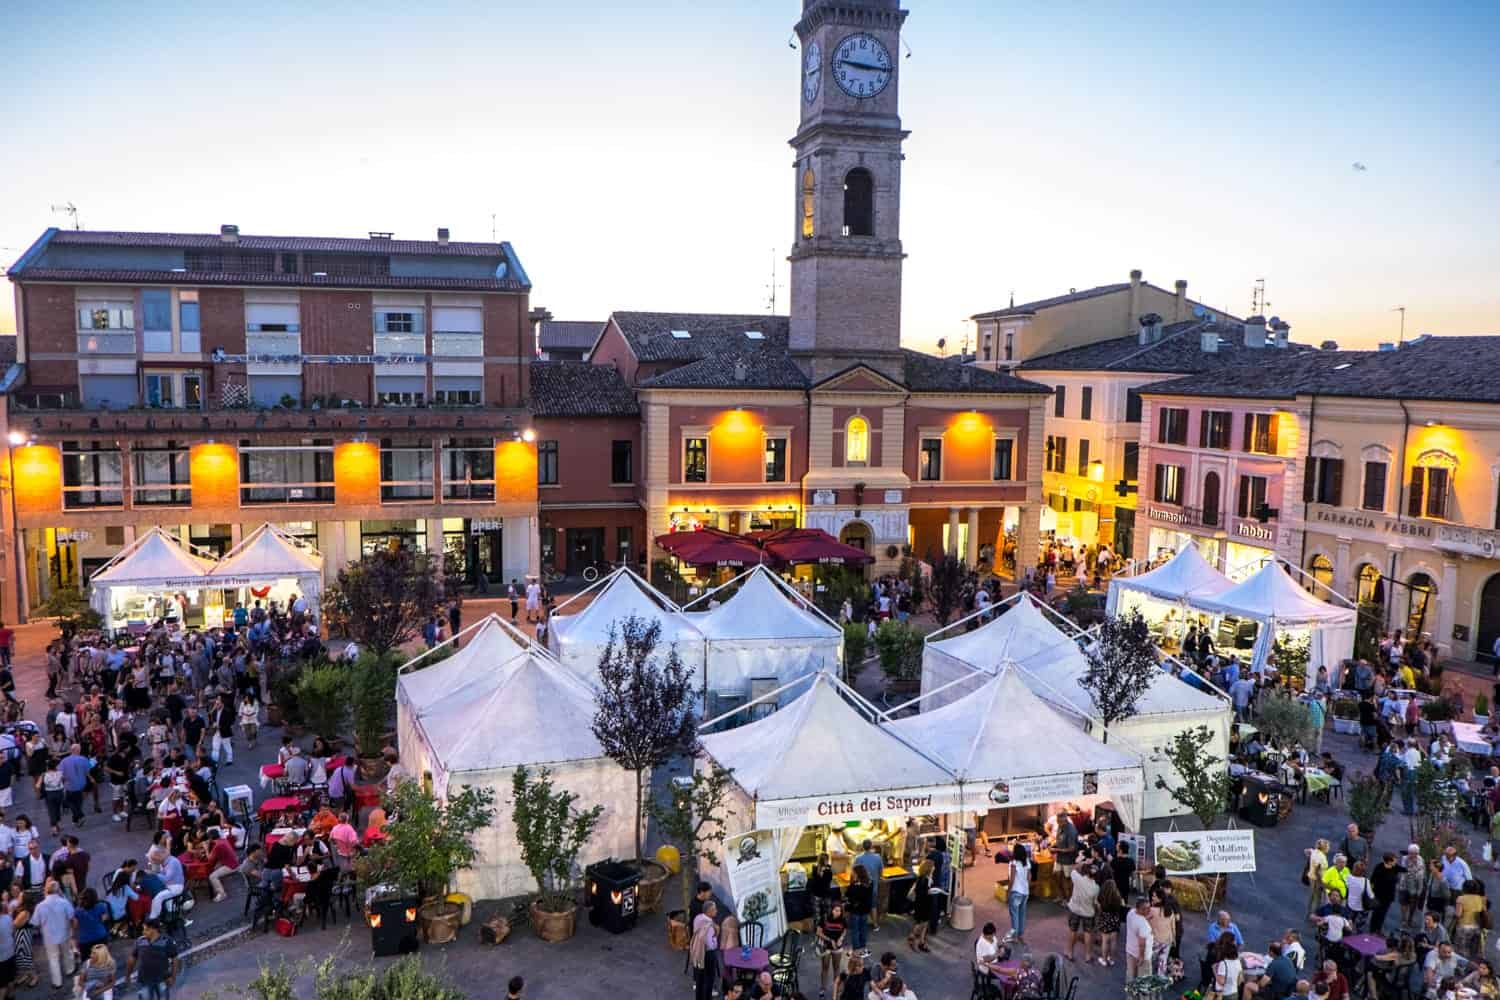  Dozens of food stalls during the Artusi Festival / Festa Artusiana in Forlimpopoli, Italy